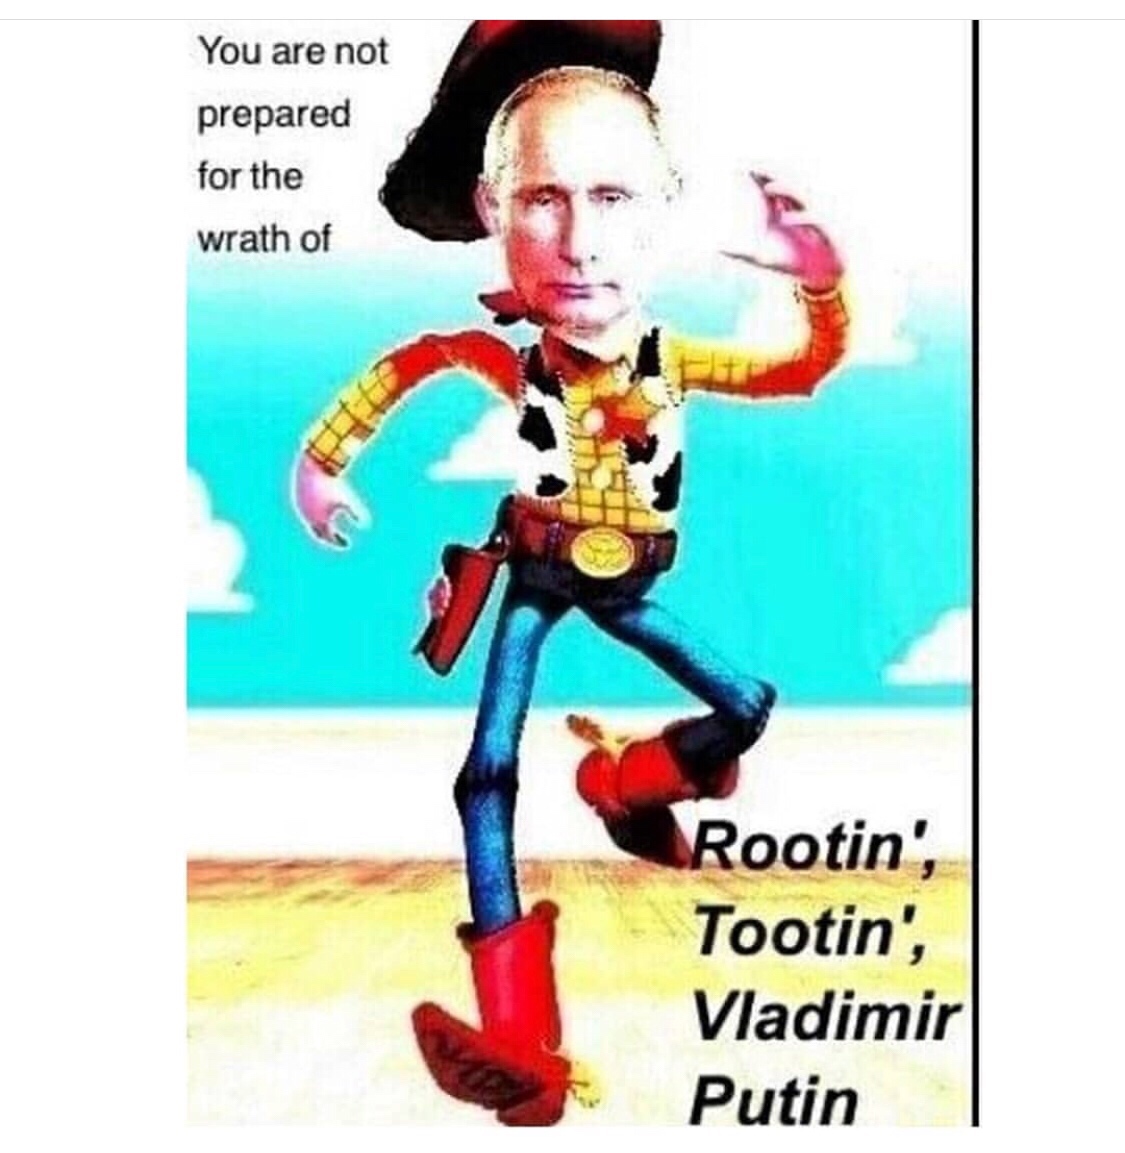 pics and memes - rootin tootin vladimir putin - You are not prepared for the wrath of Rootin', Tootin', Vladimir Putin